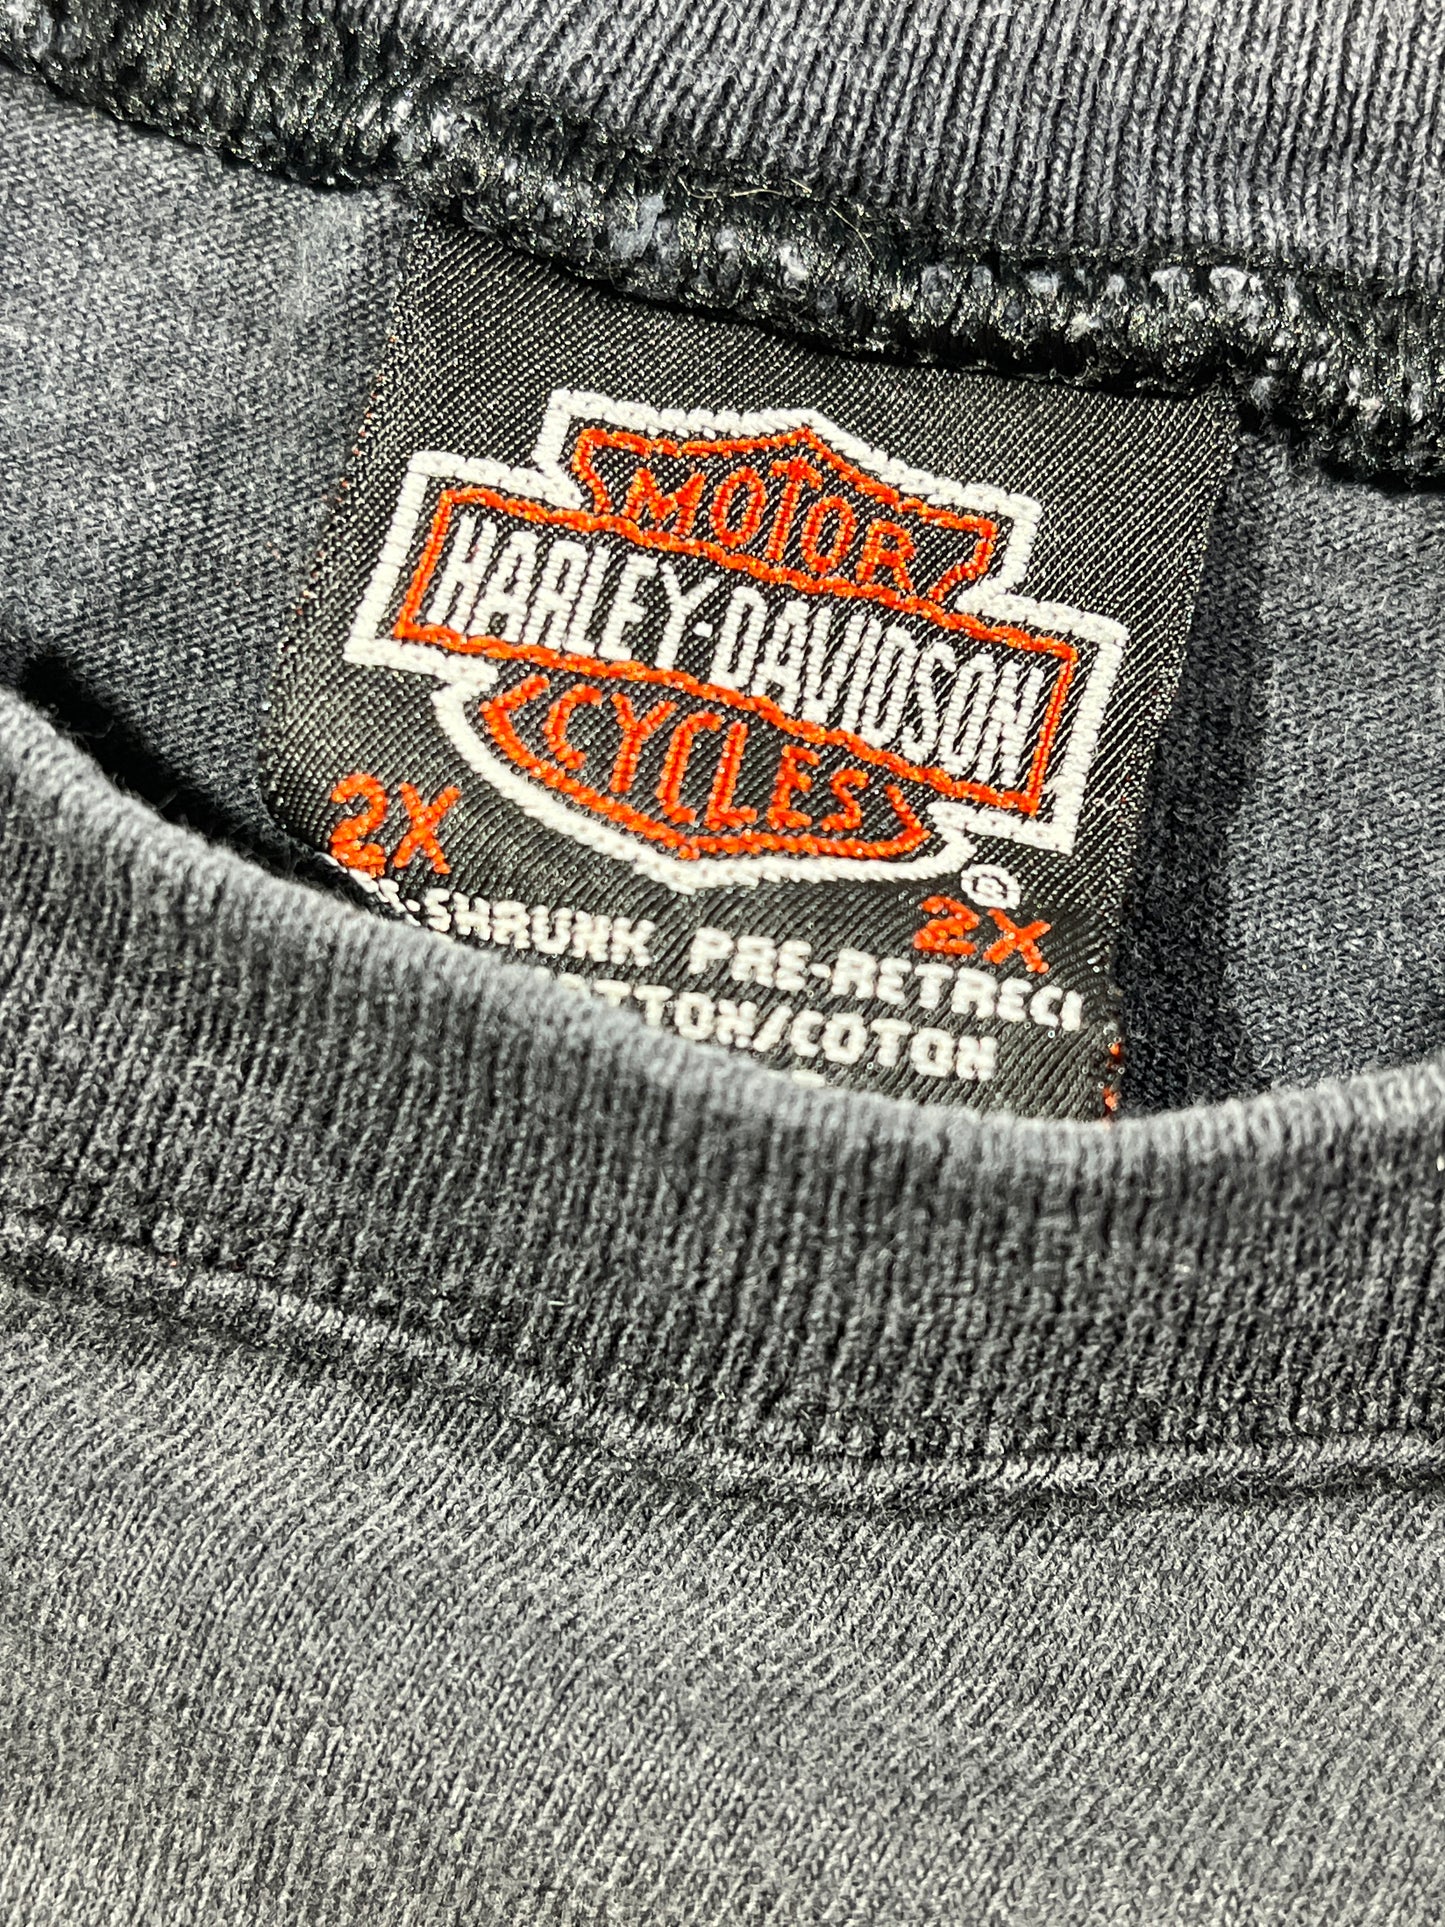 Vintage Harley Davidson Tank Top T-Shirt Test Our Metal Vancouver HD